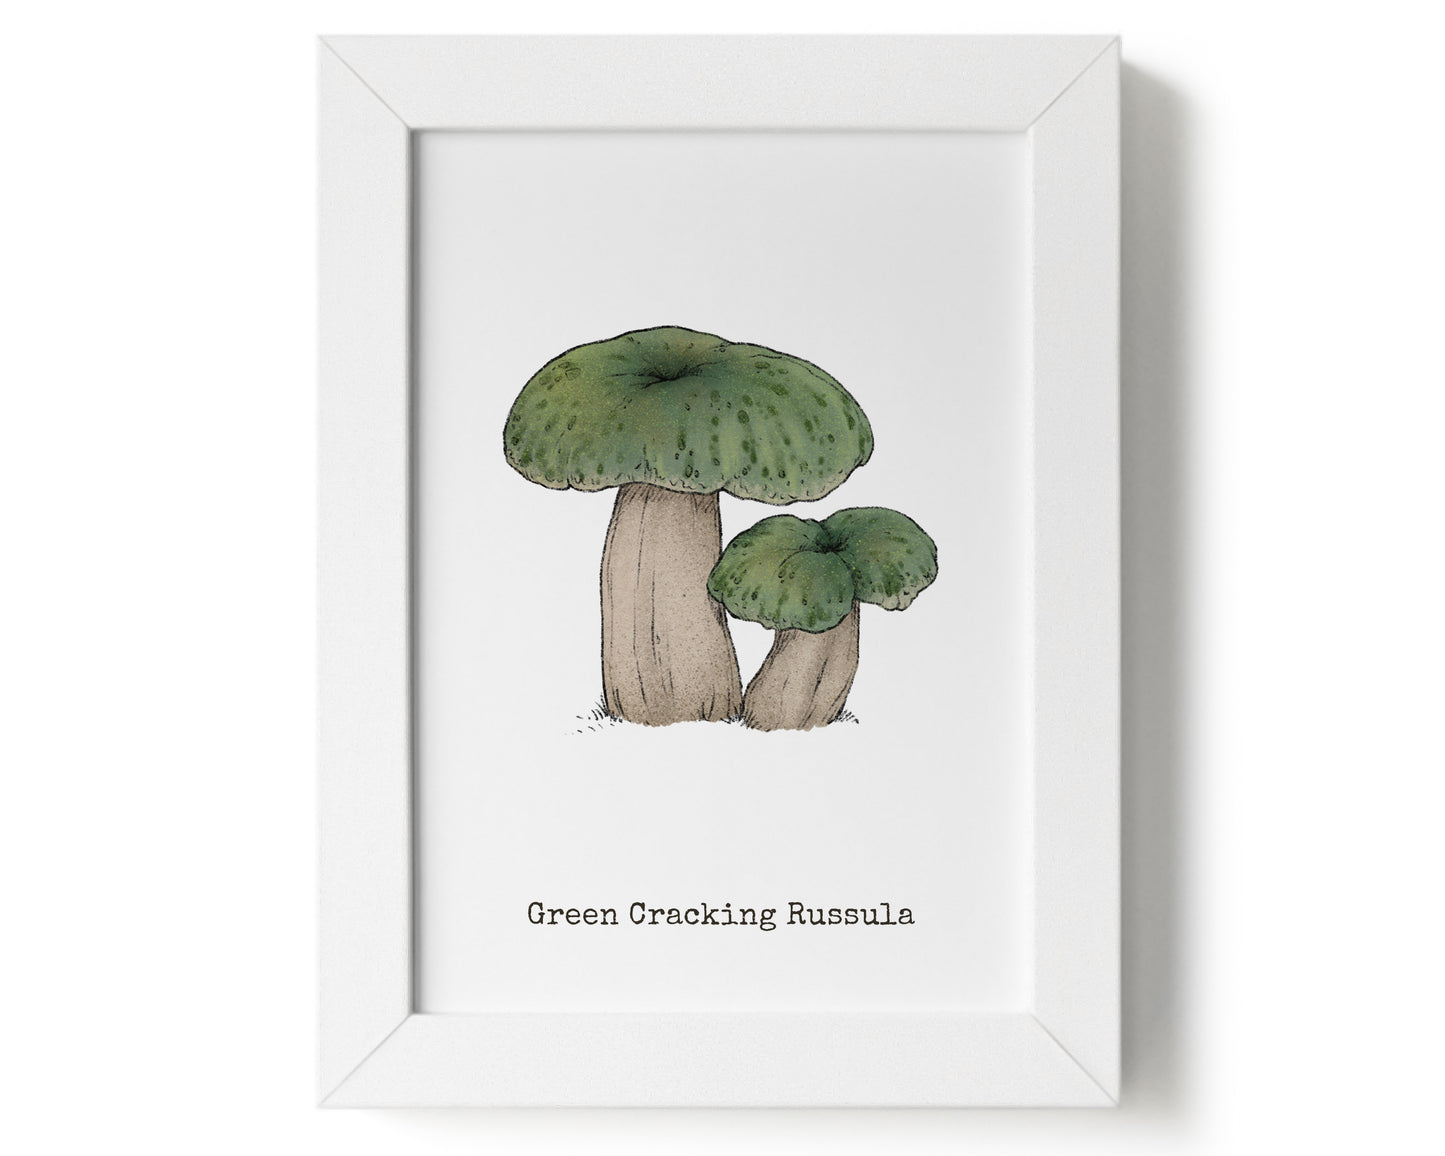 "Green Crackling Russula" by Catherine Hébert - Green Crackling Russula Mushroom Art Print - 5"x7" size